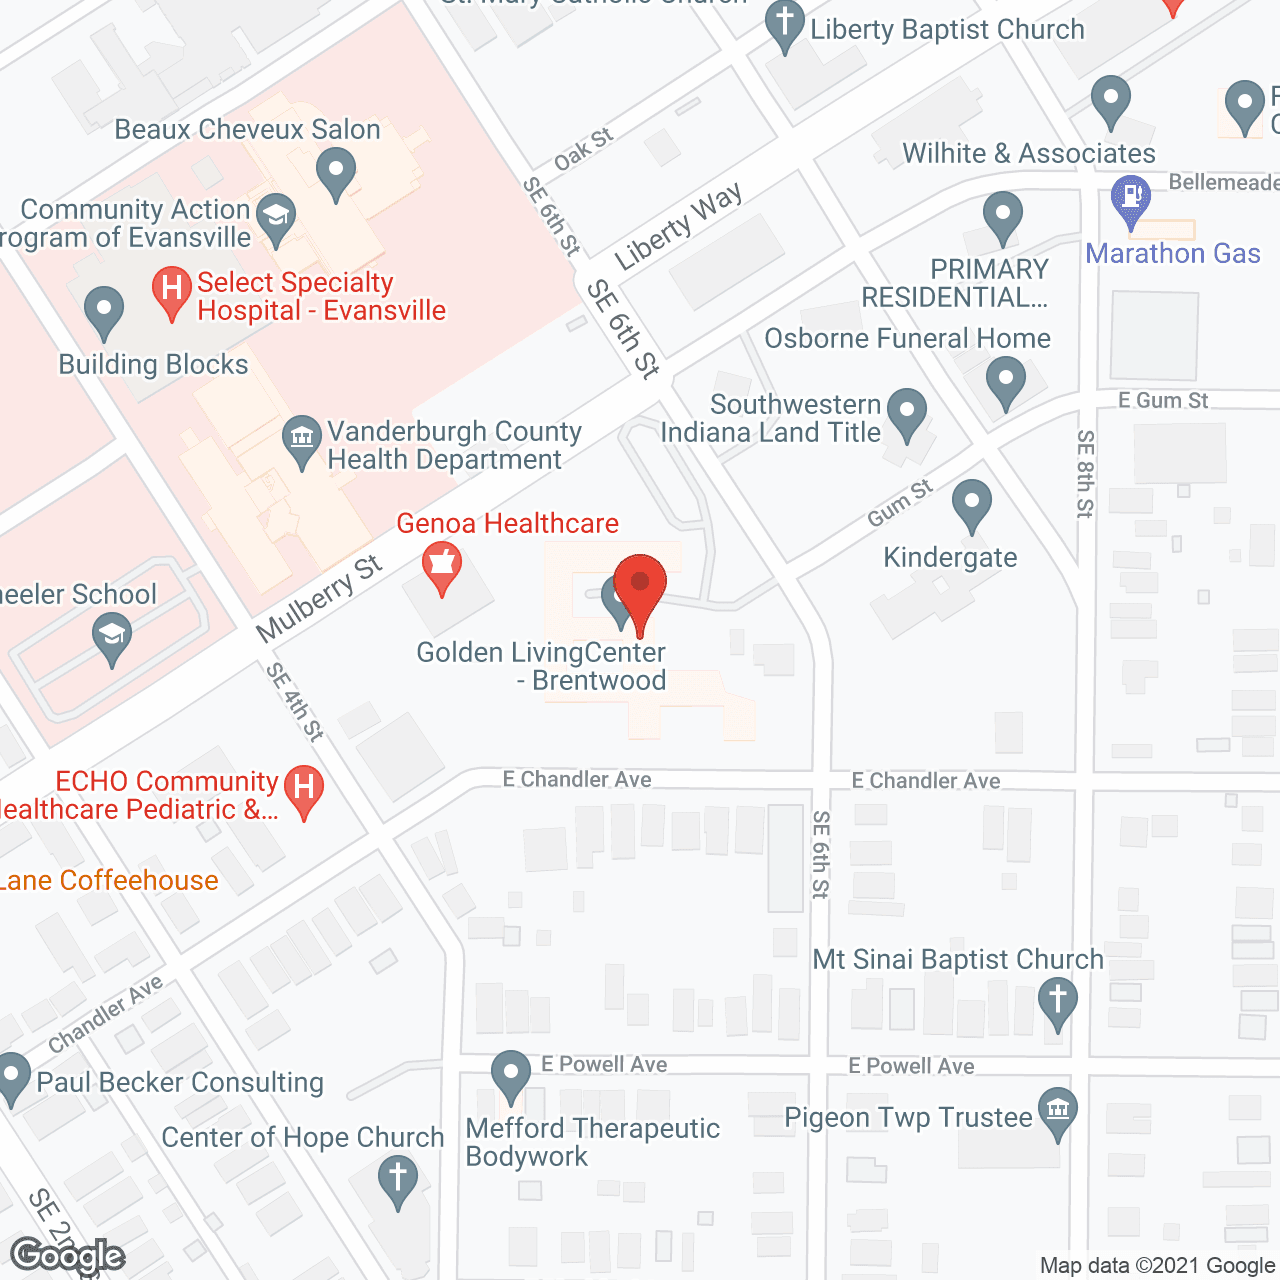 Golden Living Center Brentwood in google map